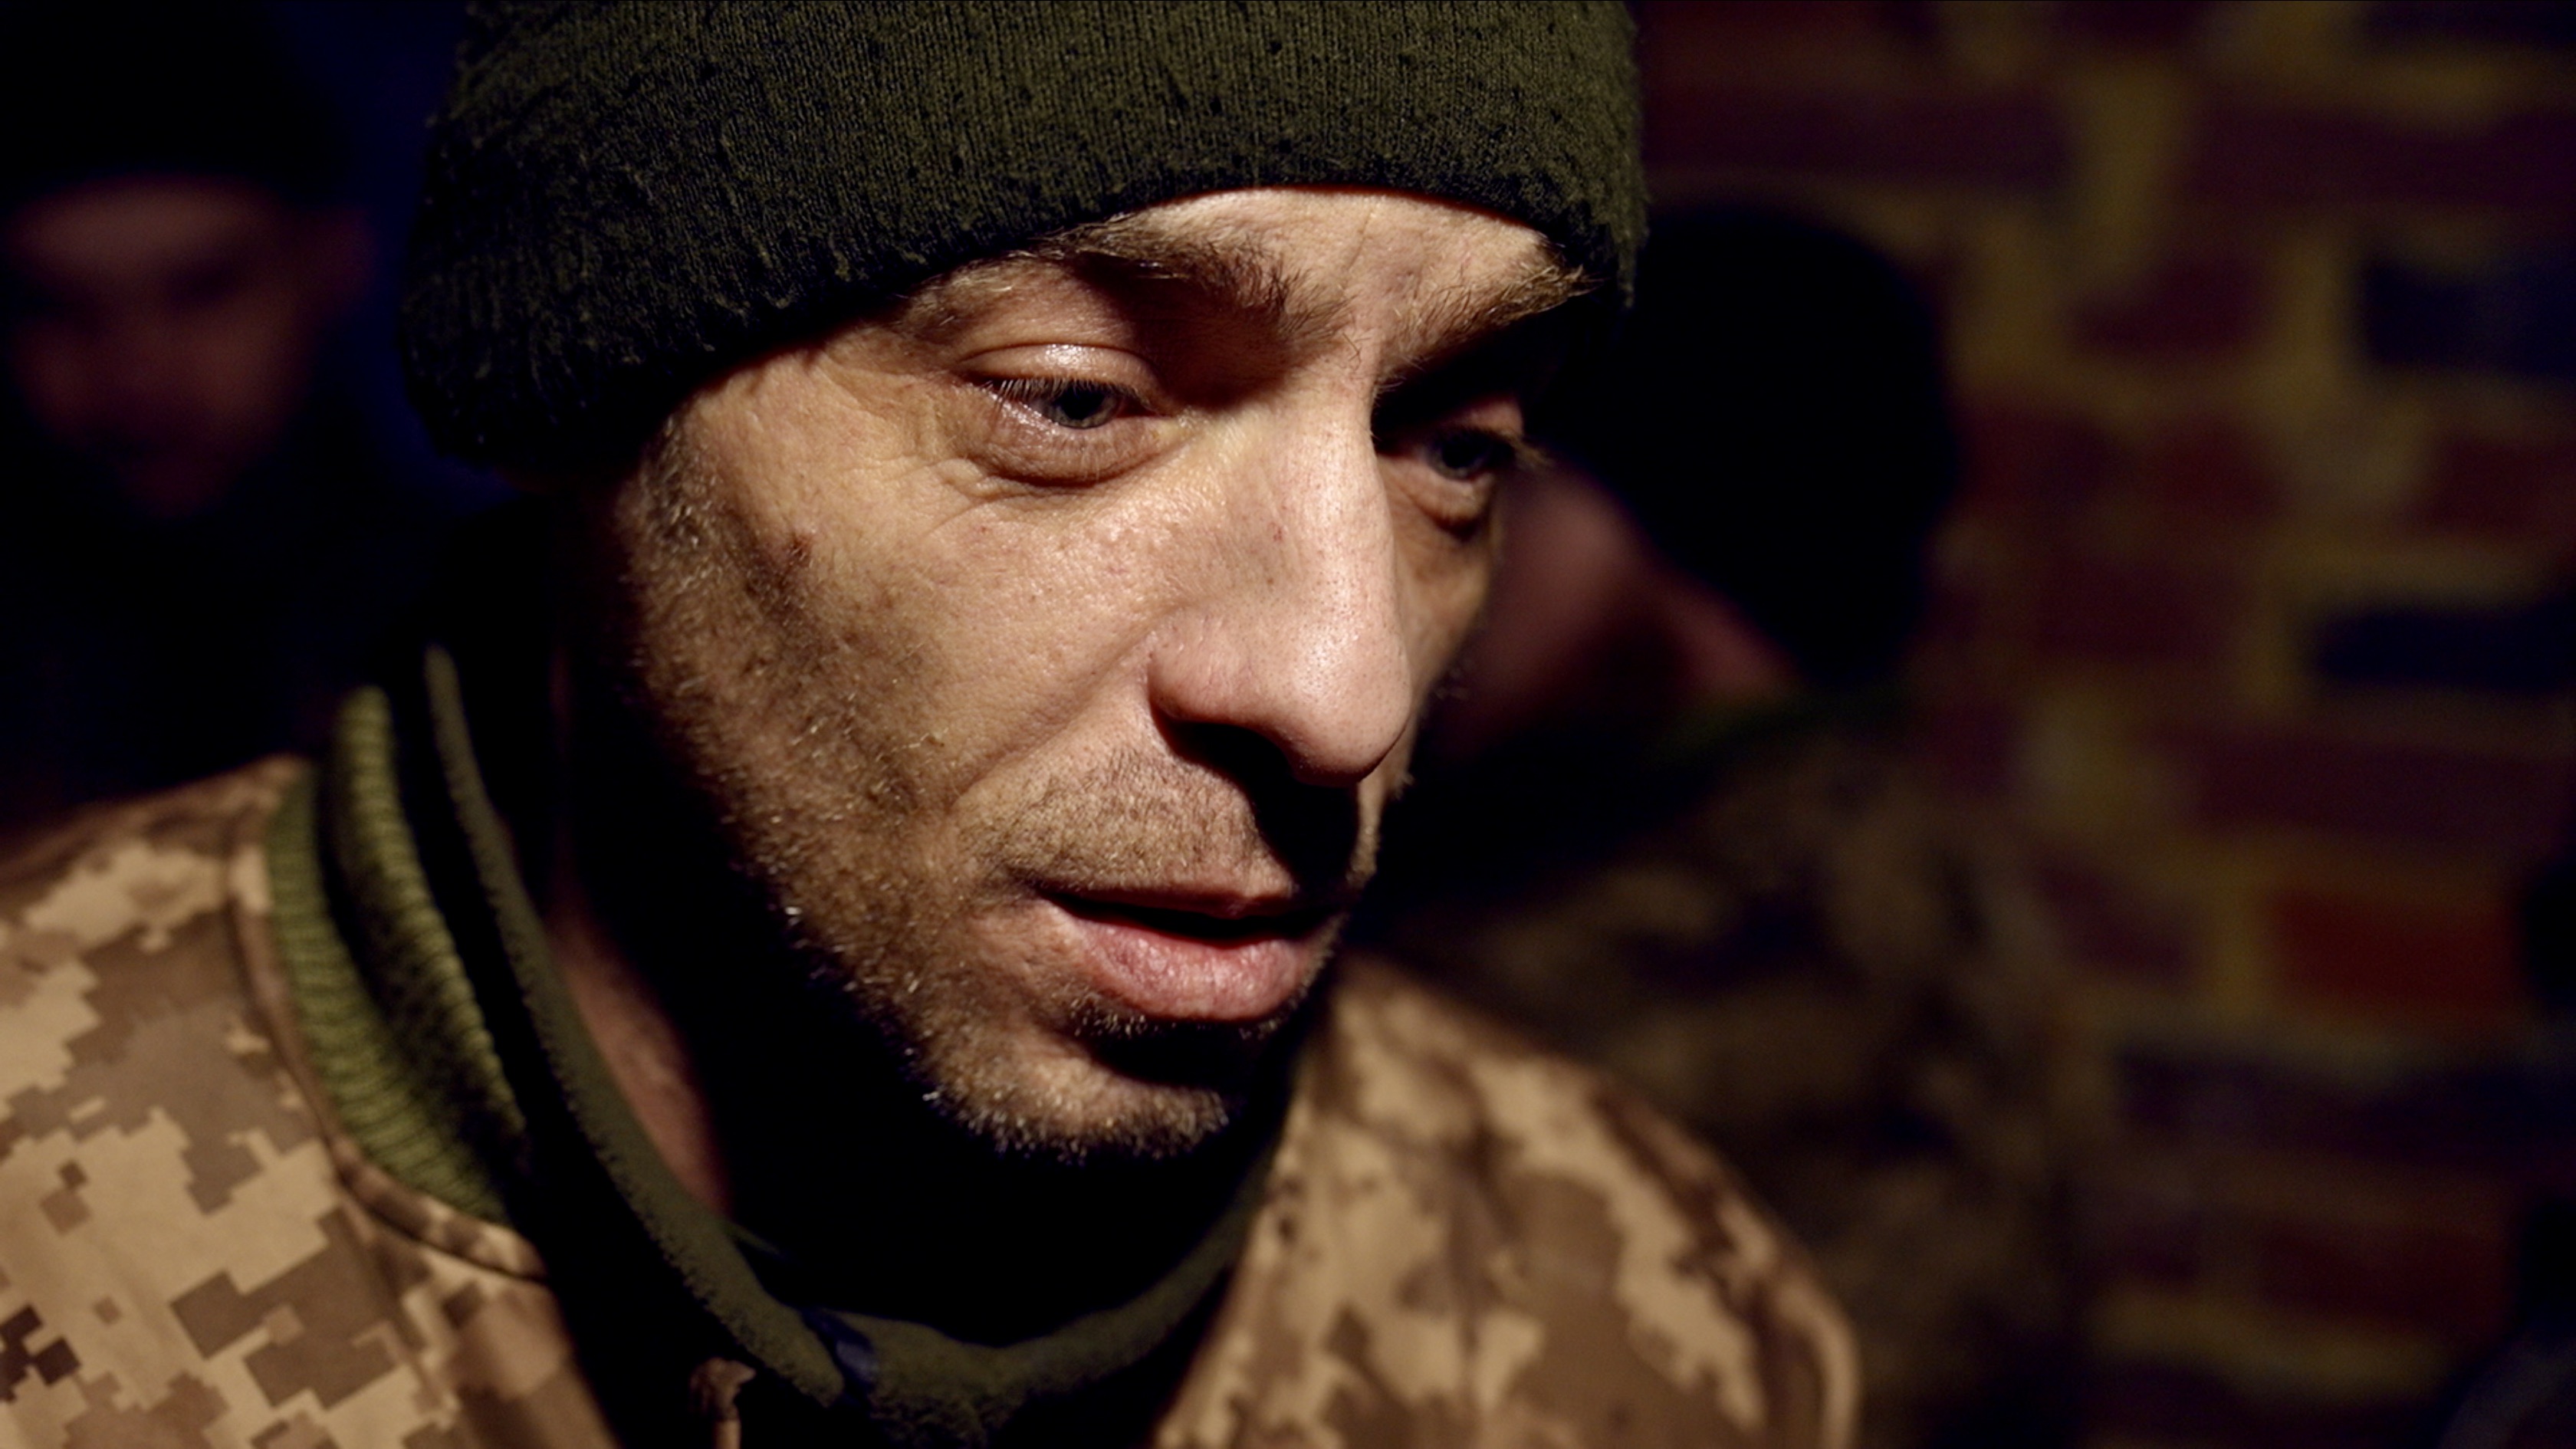 Ihor, a Ukrainian soldier